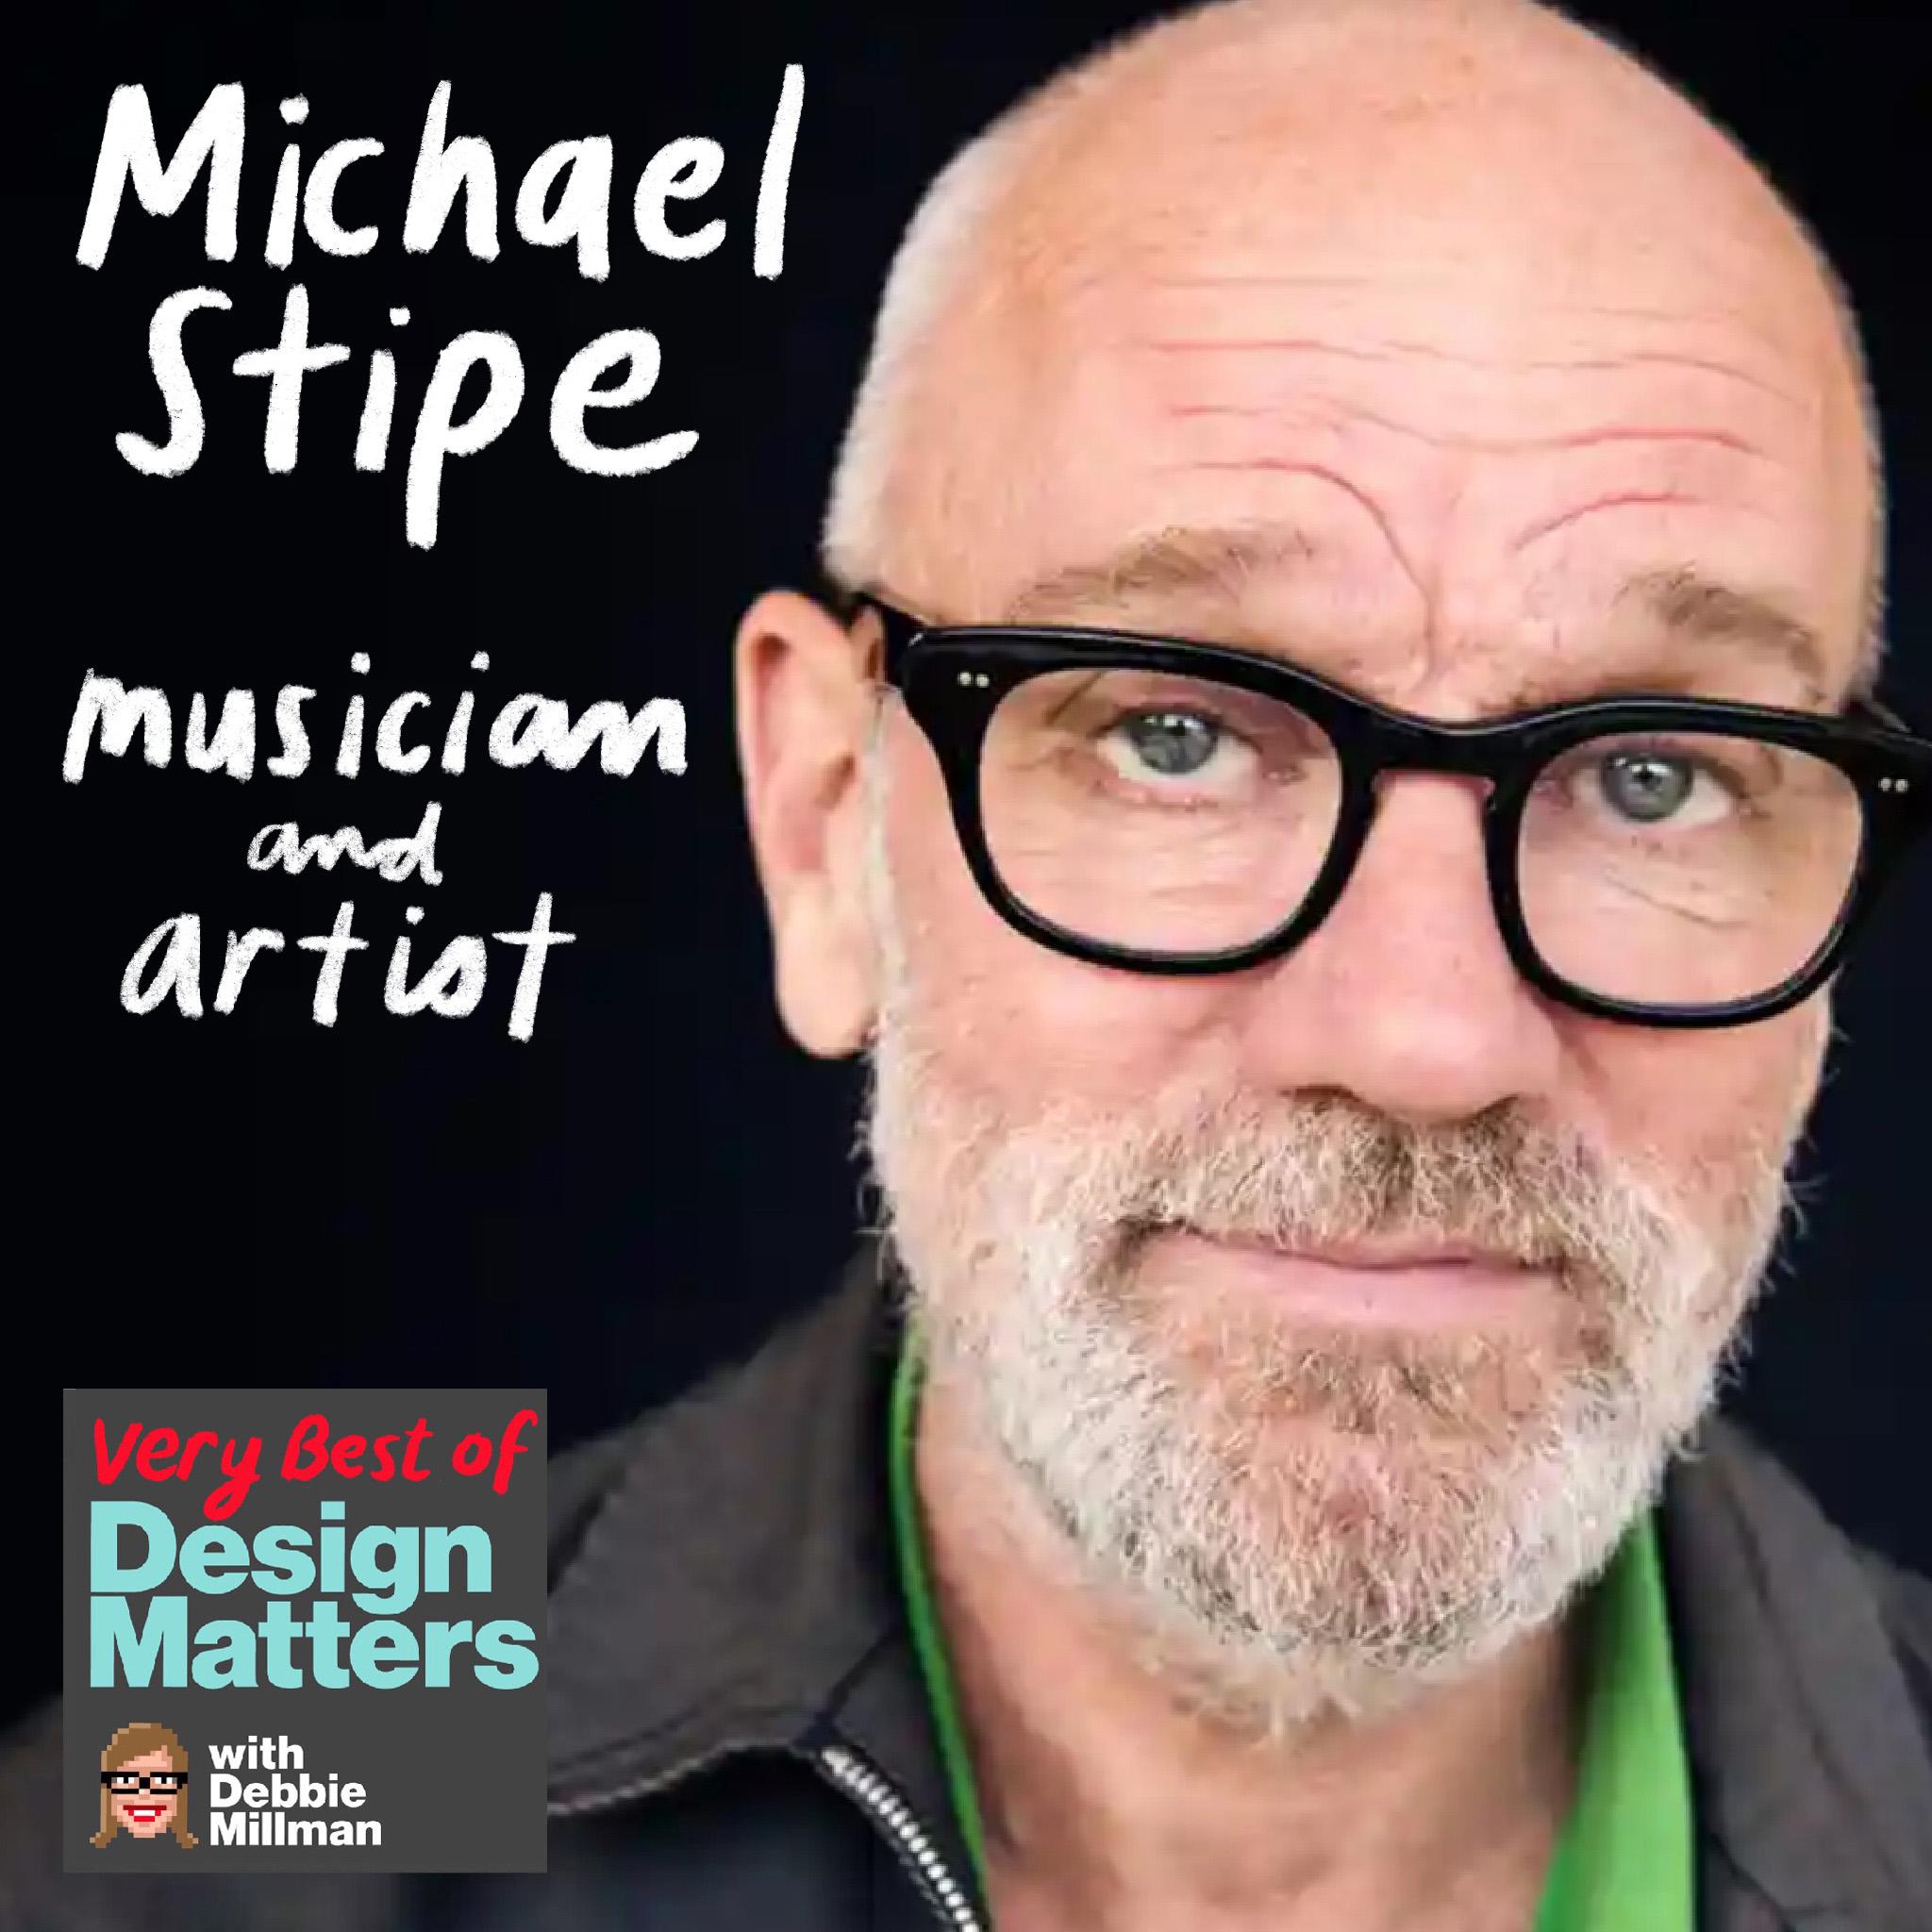 Thumbnail for "Best of Design Matters: Michael Stipe ".